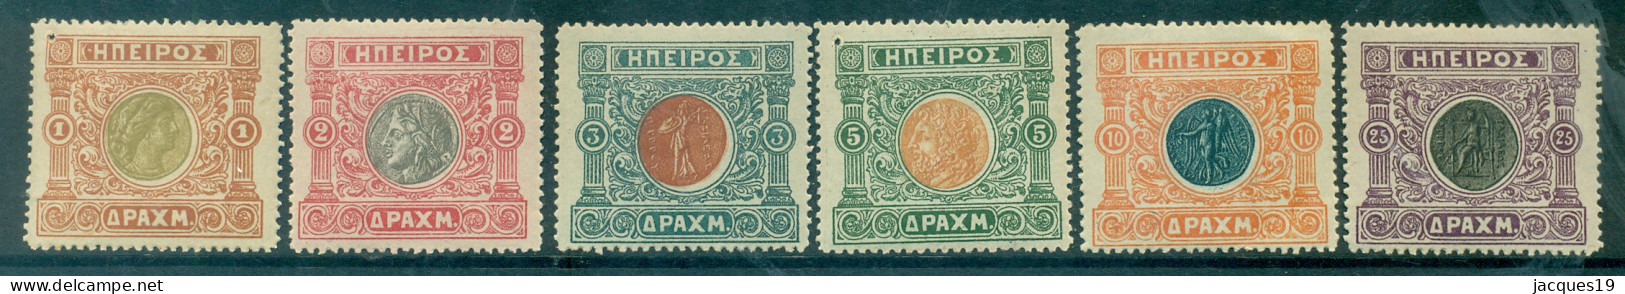 Epirus 1914 Moschopolis Issue Ancient Epirot Coins/Medals High Values Scott # 51-56 Mint Hinged - Epirus & Albania